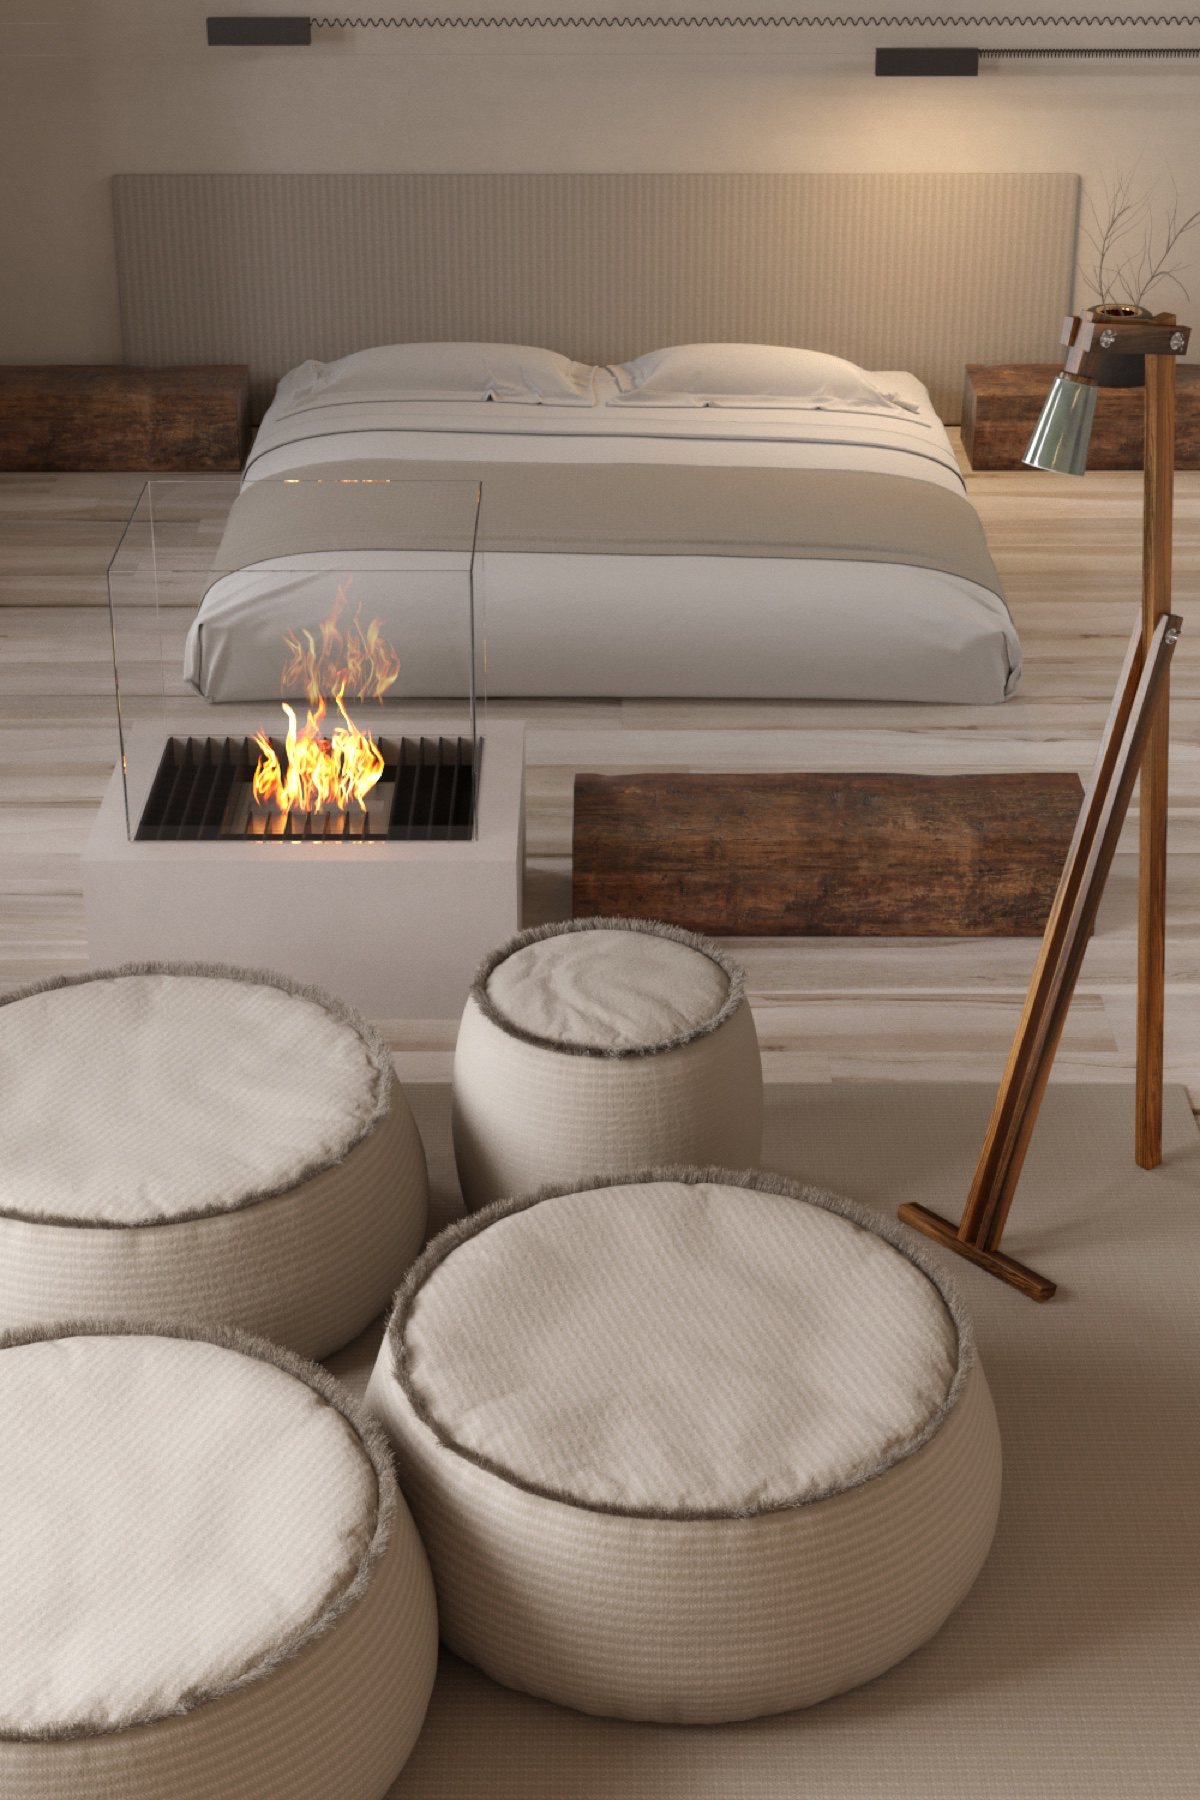 Rustic bedroom roaring glass fireplace beige striped ottomans